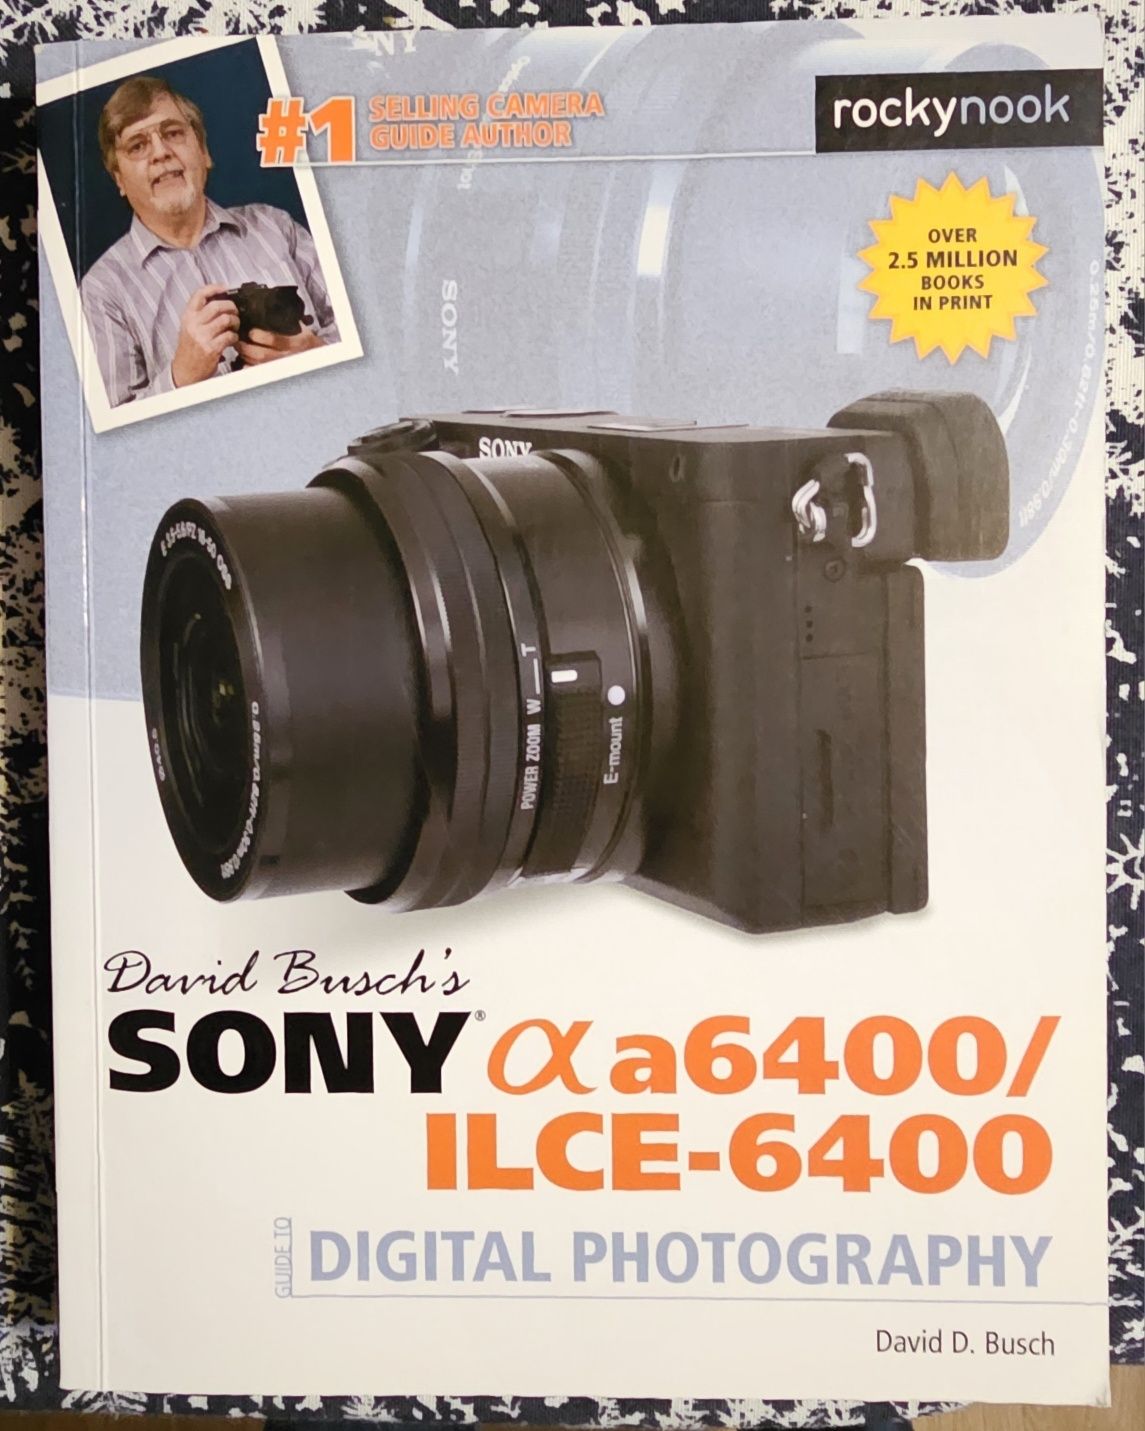 Manual utilizare și setări aparat mirrorless Sony A6400/ILCE-6400